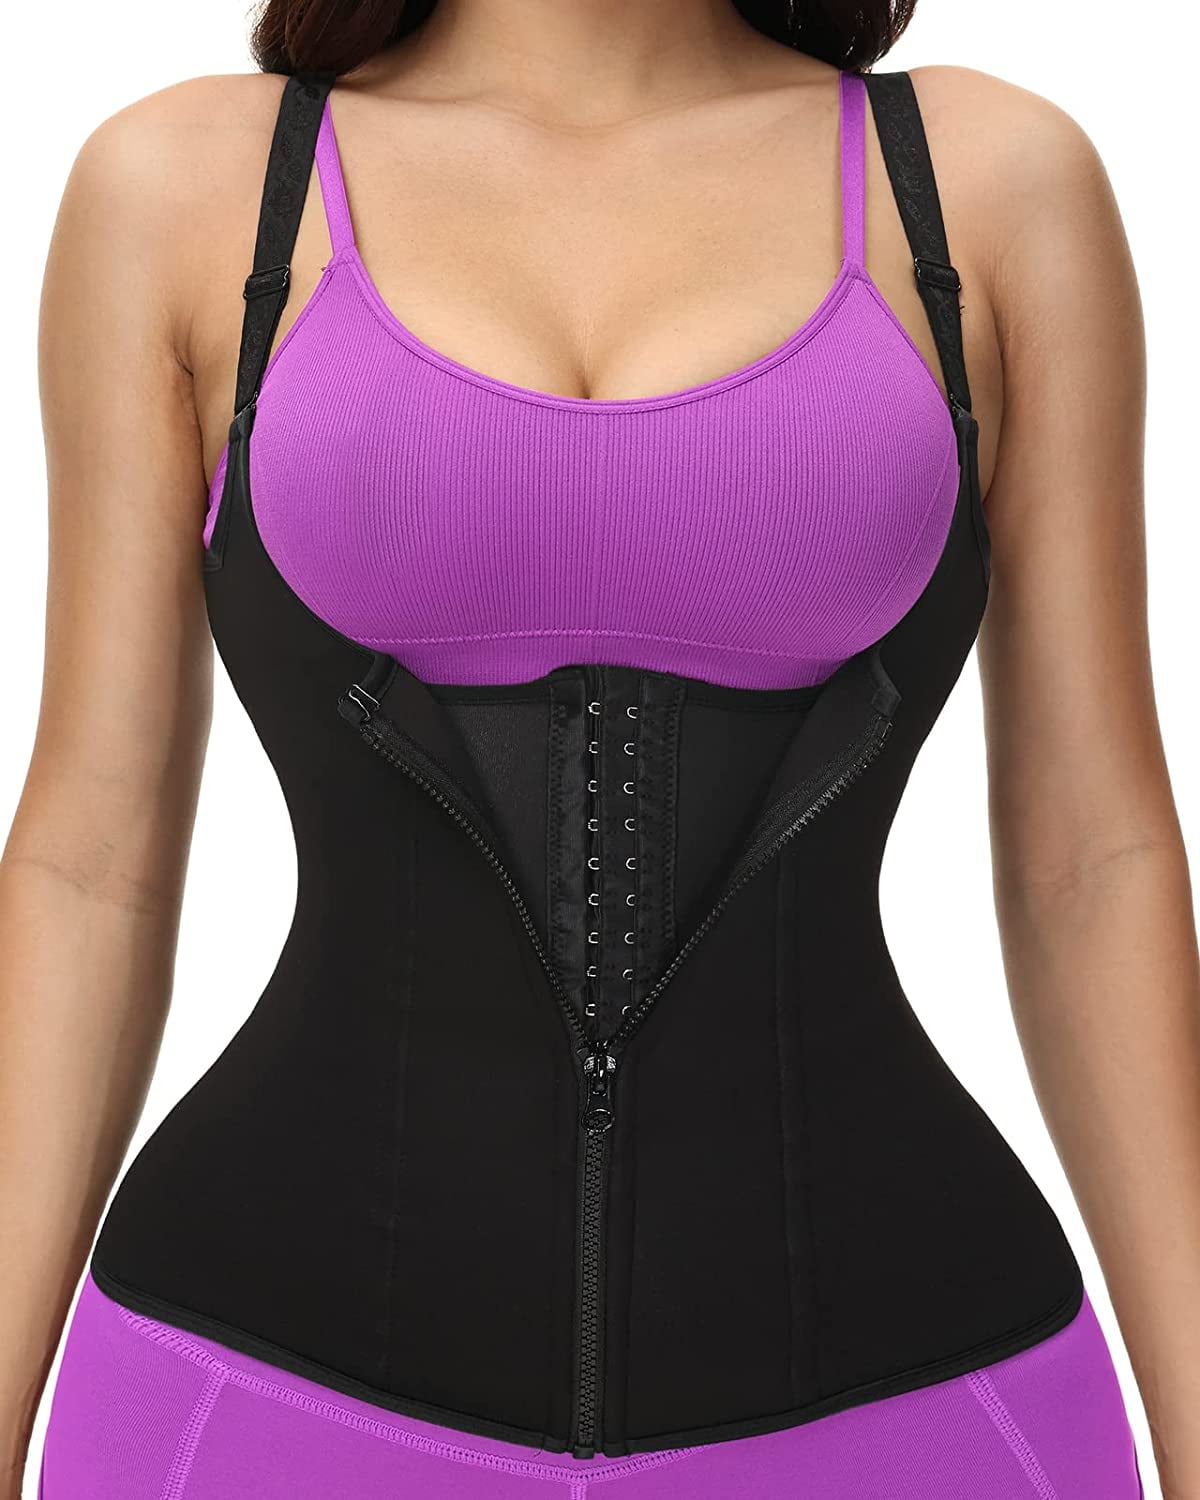 Corset Waist Trainer Vest for Women Weight Loss ,Tummy Control Sport  Workout Body Shaper Black with Zipper & Straps for Men,Black,M